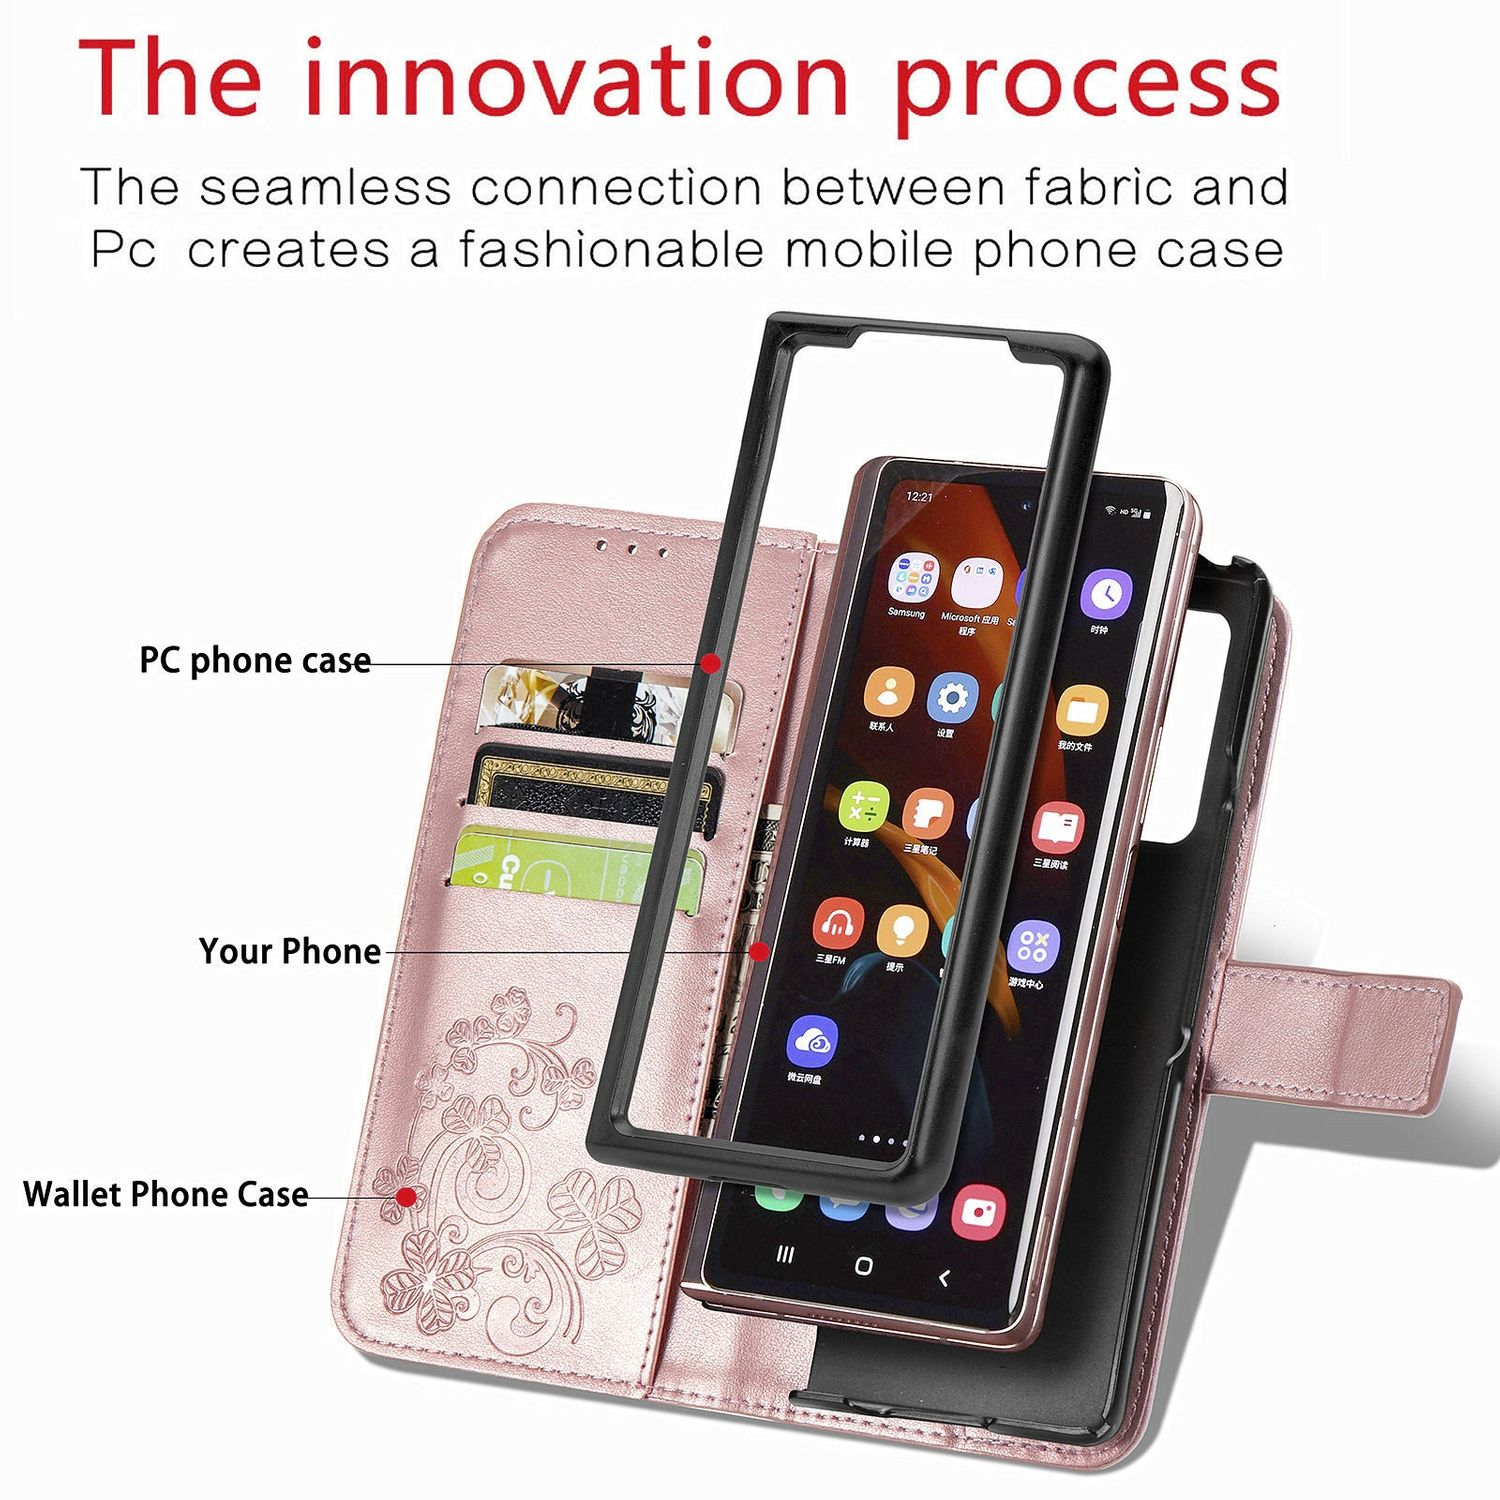 Z Fold3 Case, 5G, Bookcover, 120 Galaxy Samsung, Book DESIGN KÖNIG